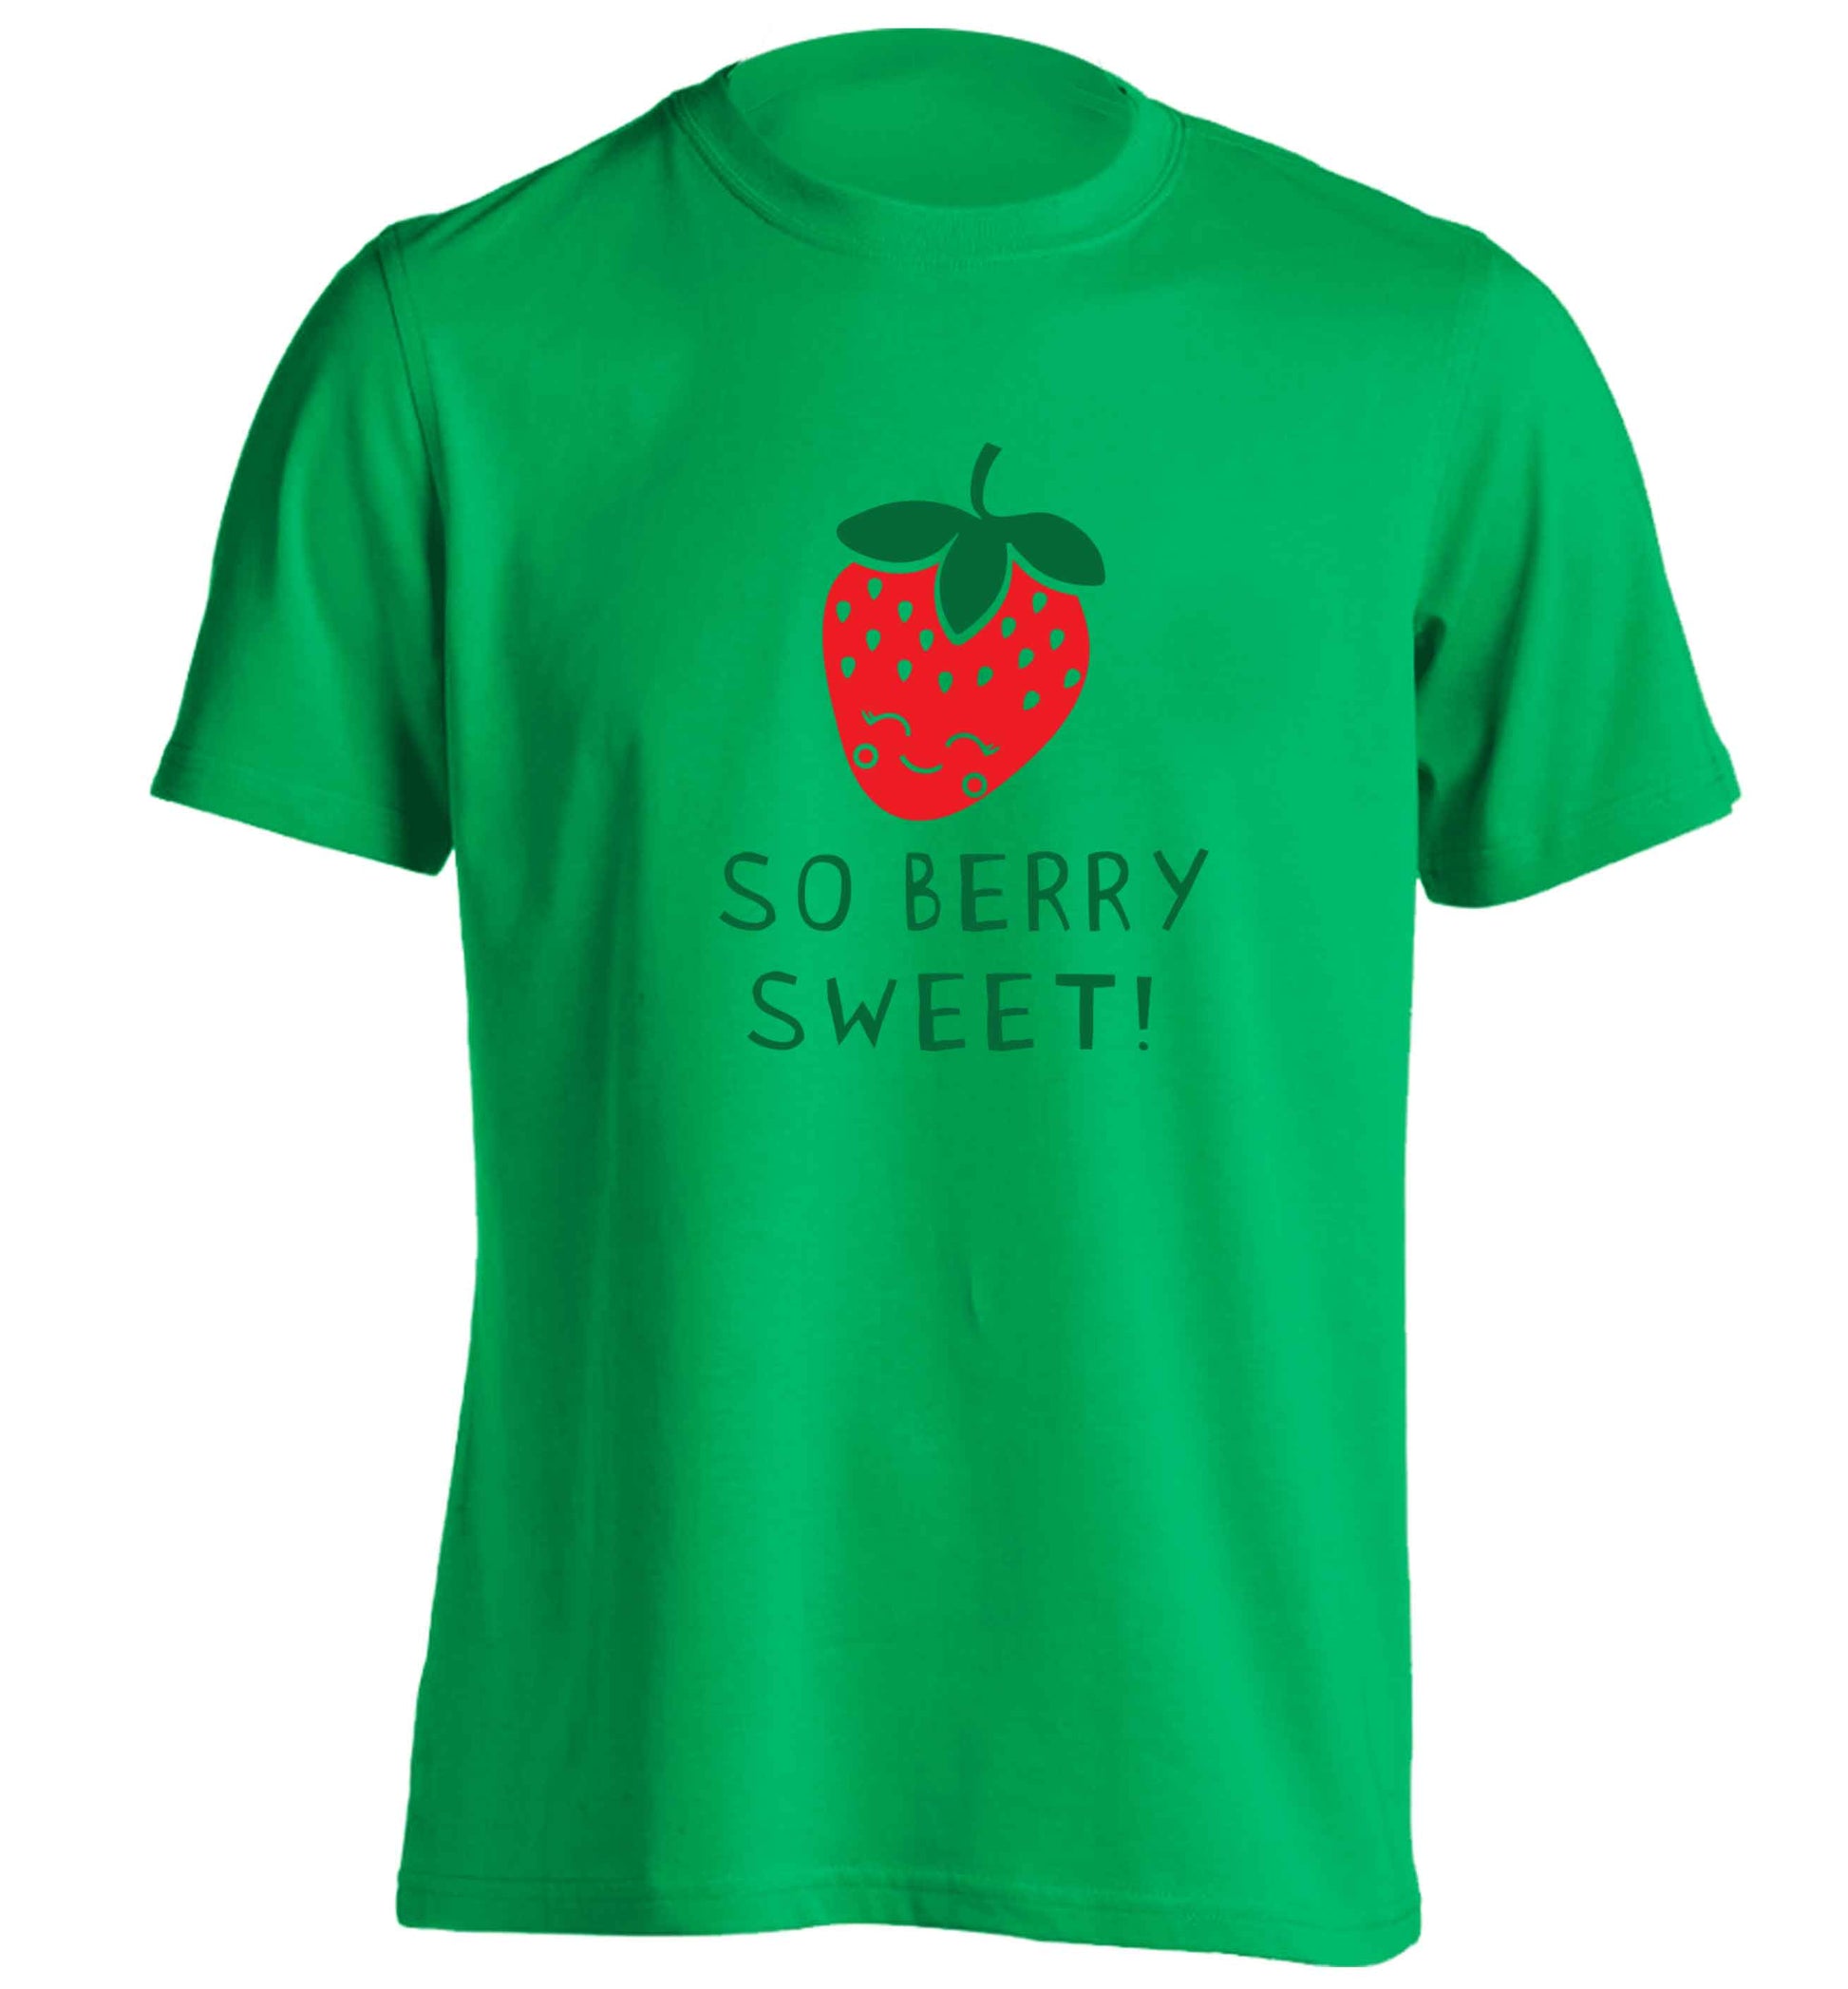 So berry sweet adults unisex green Tshirt 2XL